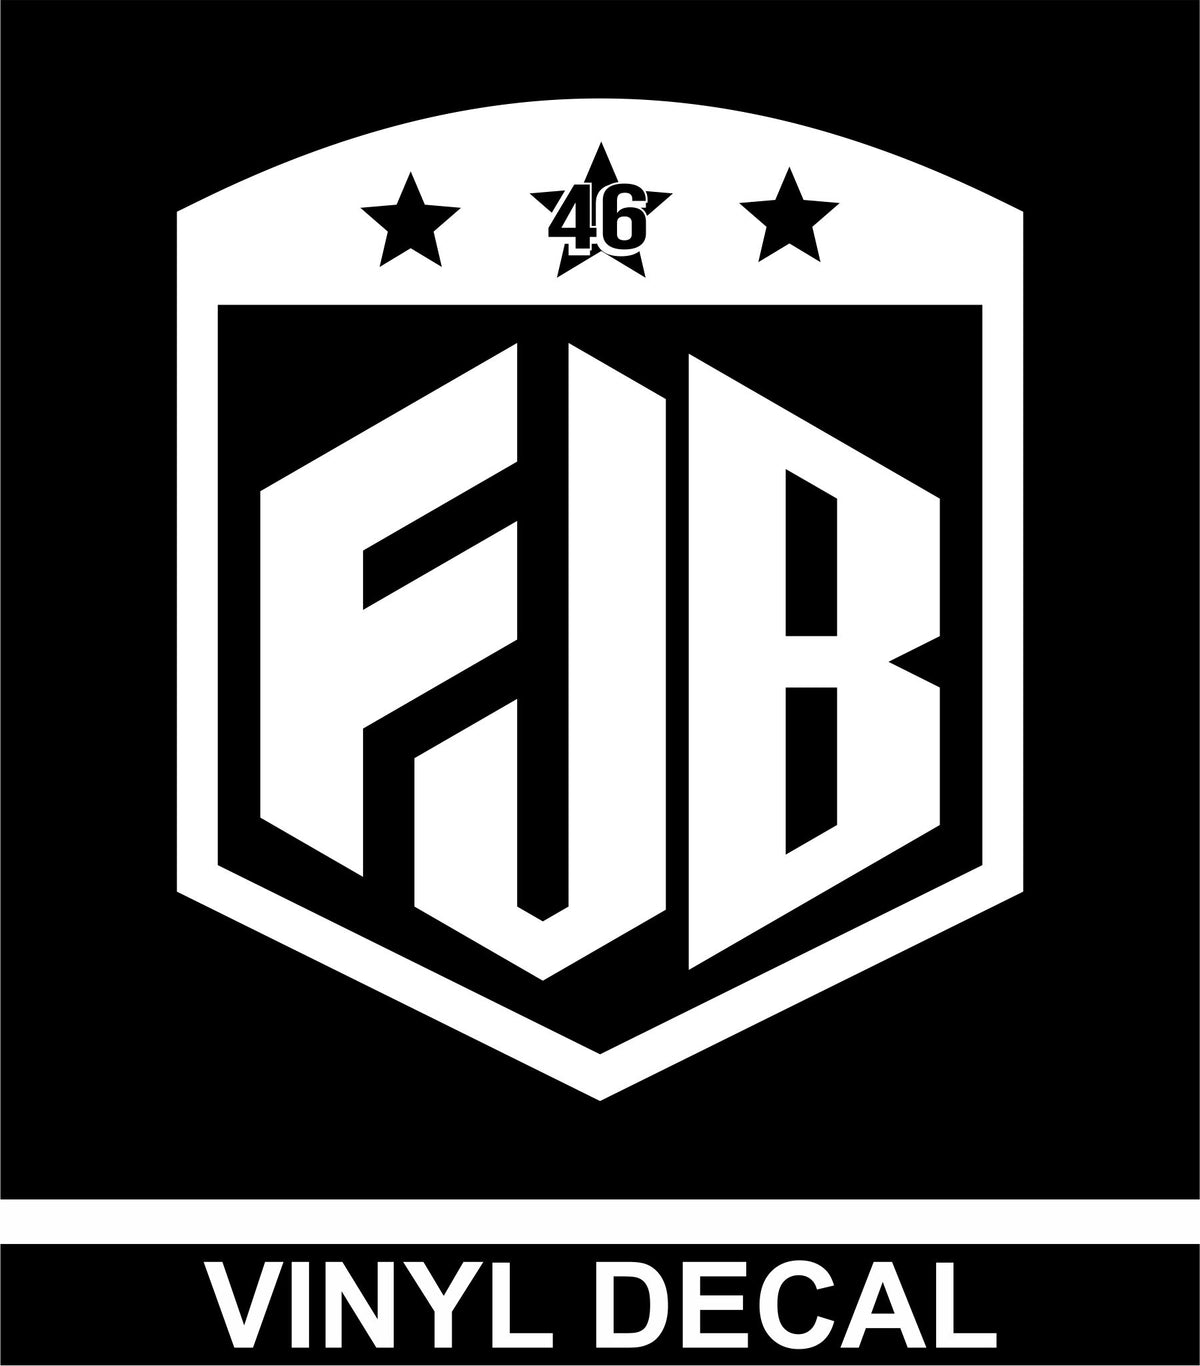 FJB - Fuck Joe Biden - Vinyl Decal